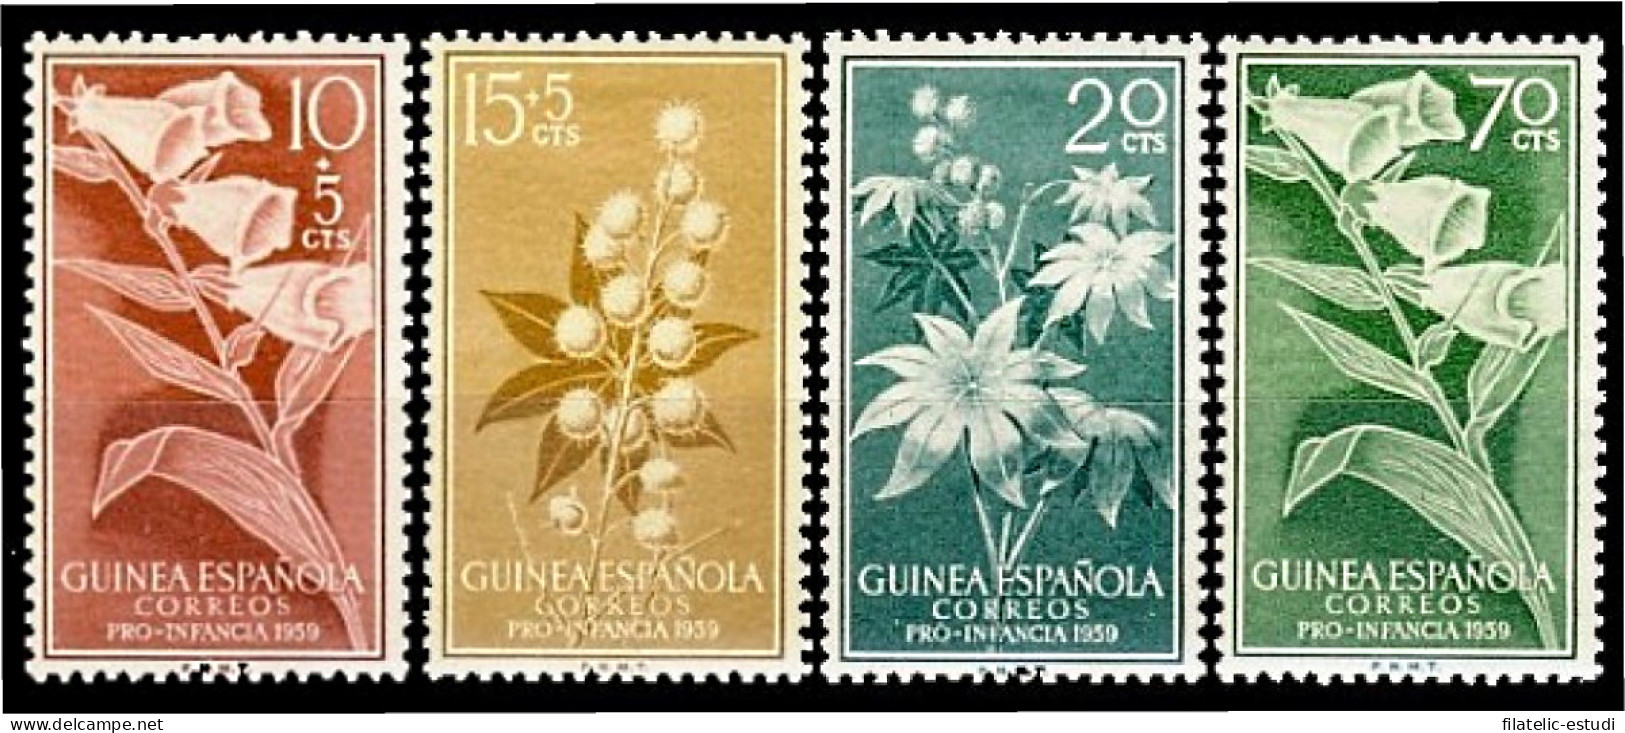 Guinea Española 391/94 1959 Pro Infancia Flora MNH - Spanish Guinea